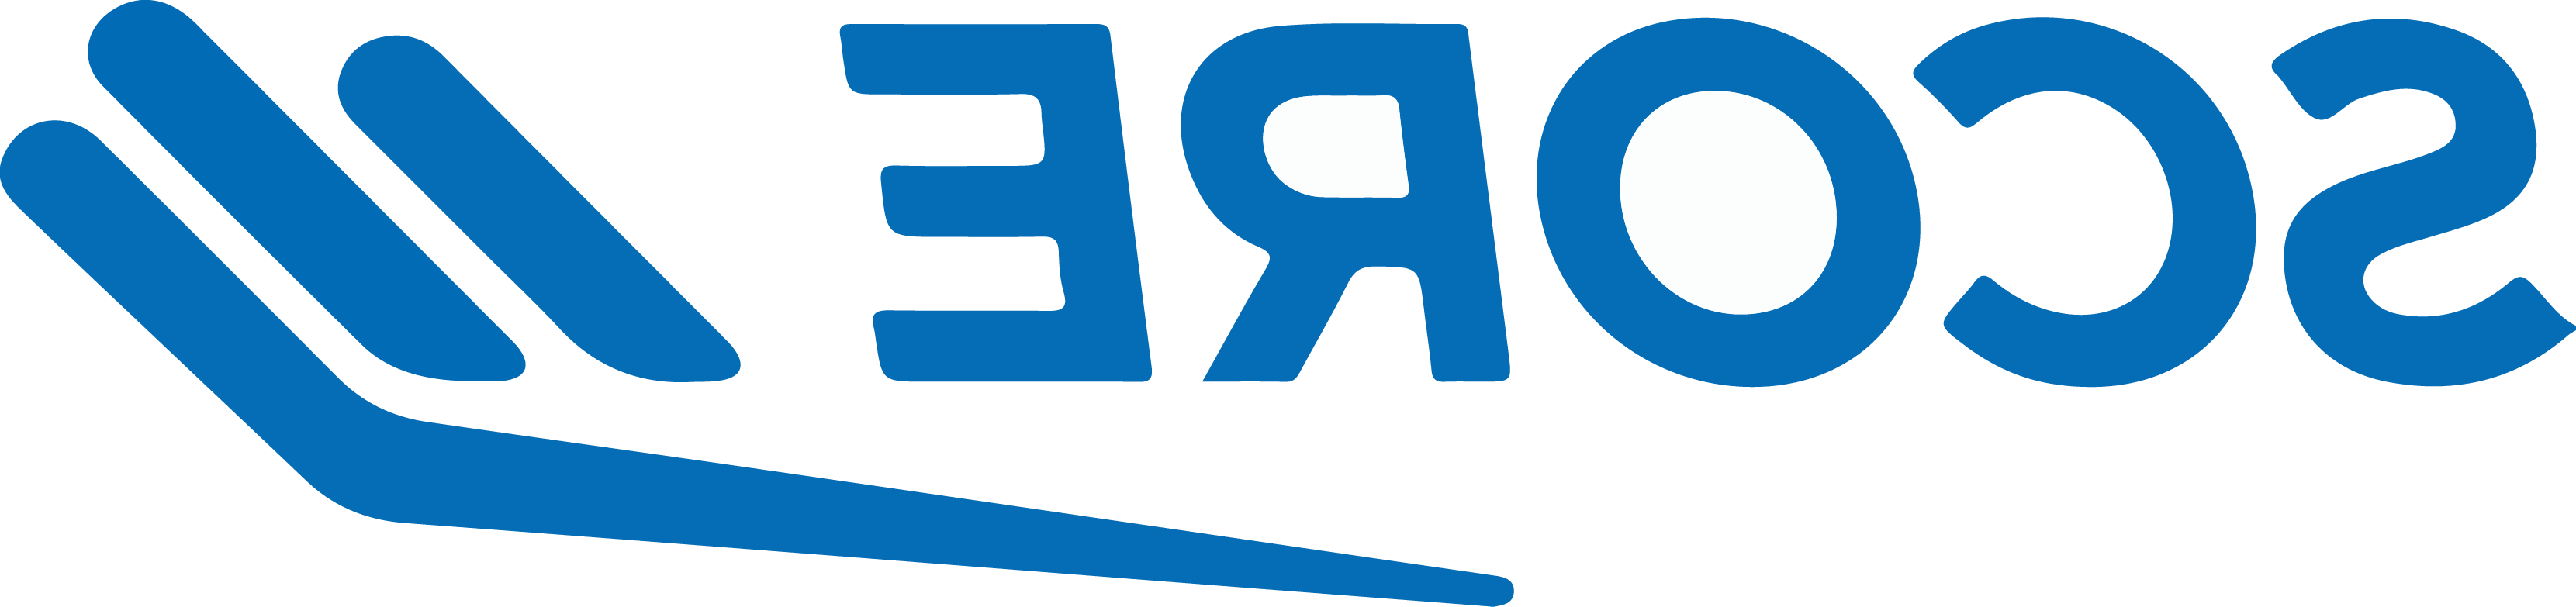 score logo